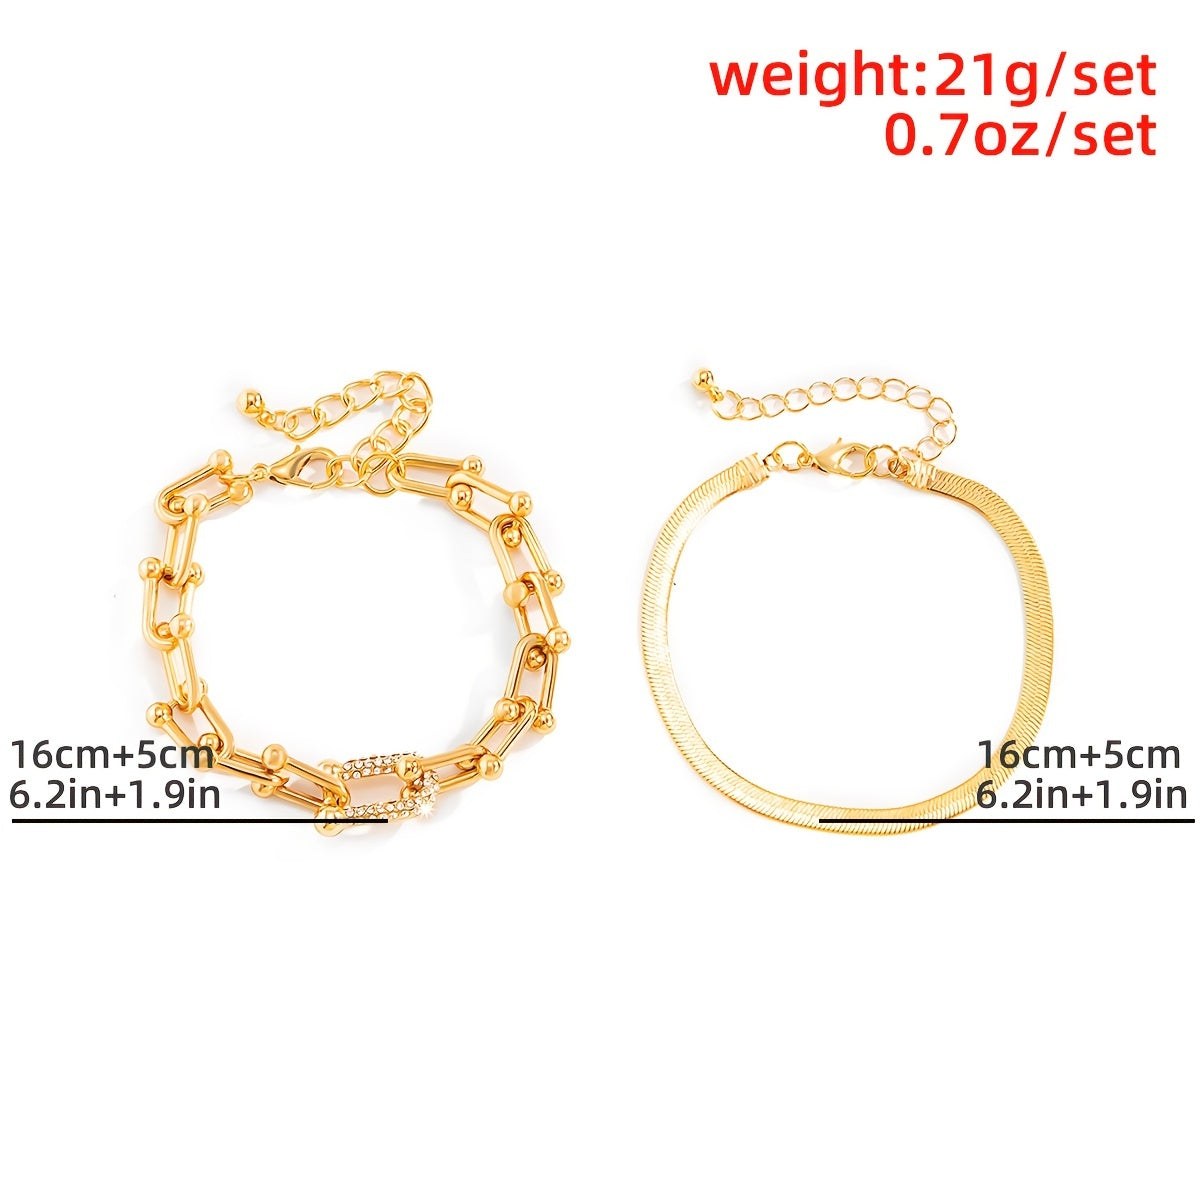 2-Piece Flat Snake Chain Diamond Bracelet Set Featuring U-shaped Buckle